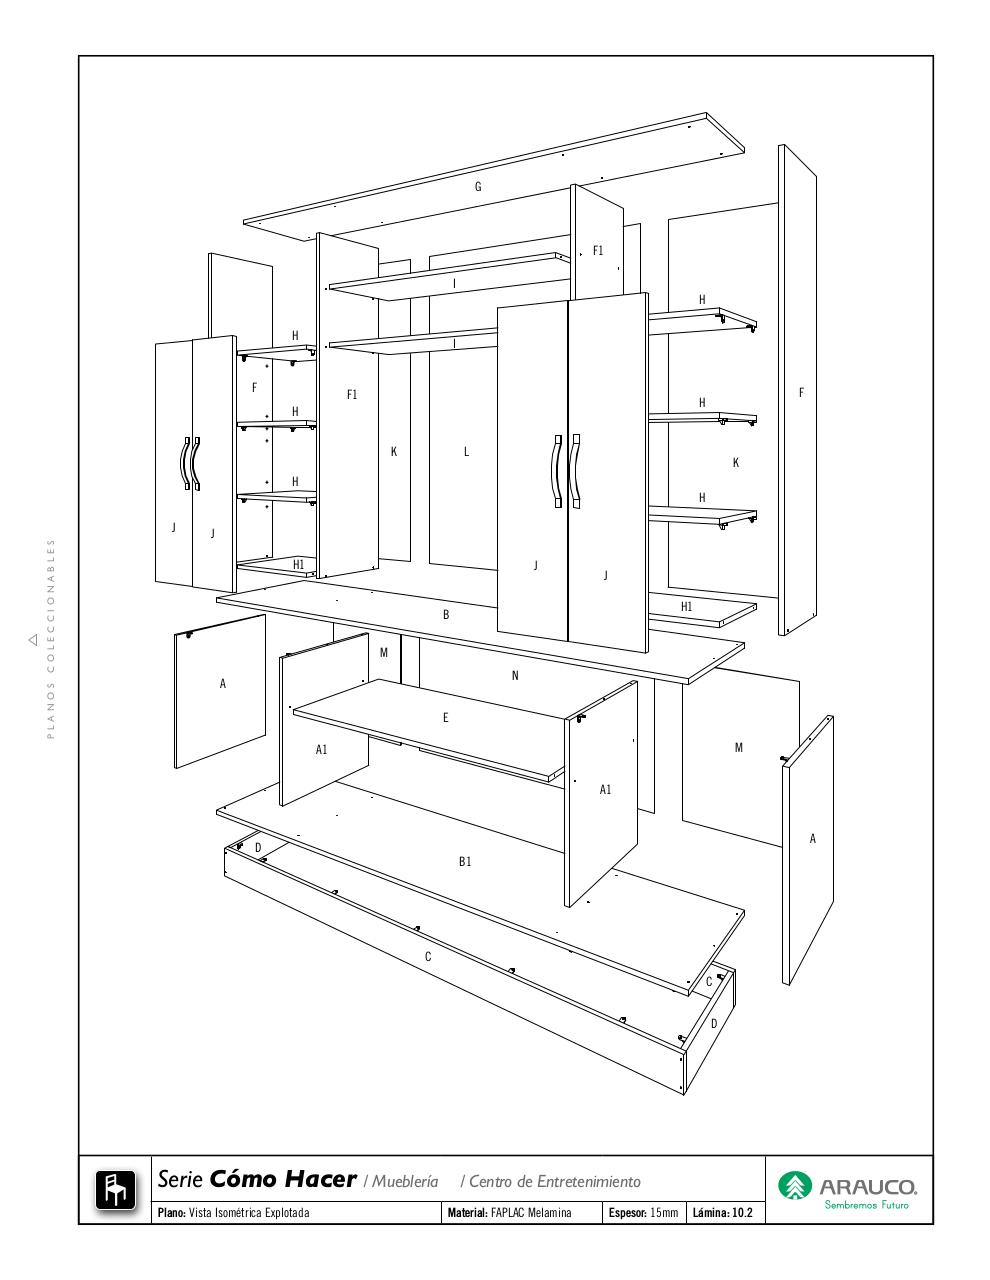 Vista previa del archivo PDF 10-15955-planos-muebleria-centro-entrete-arar-23-sep-15-1302.pdf